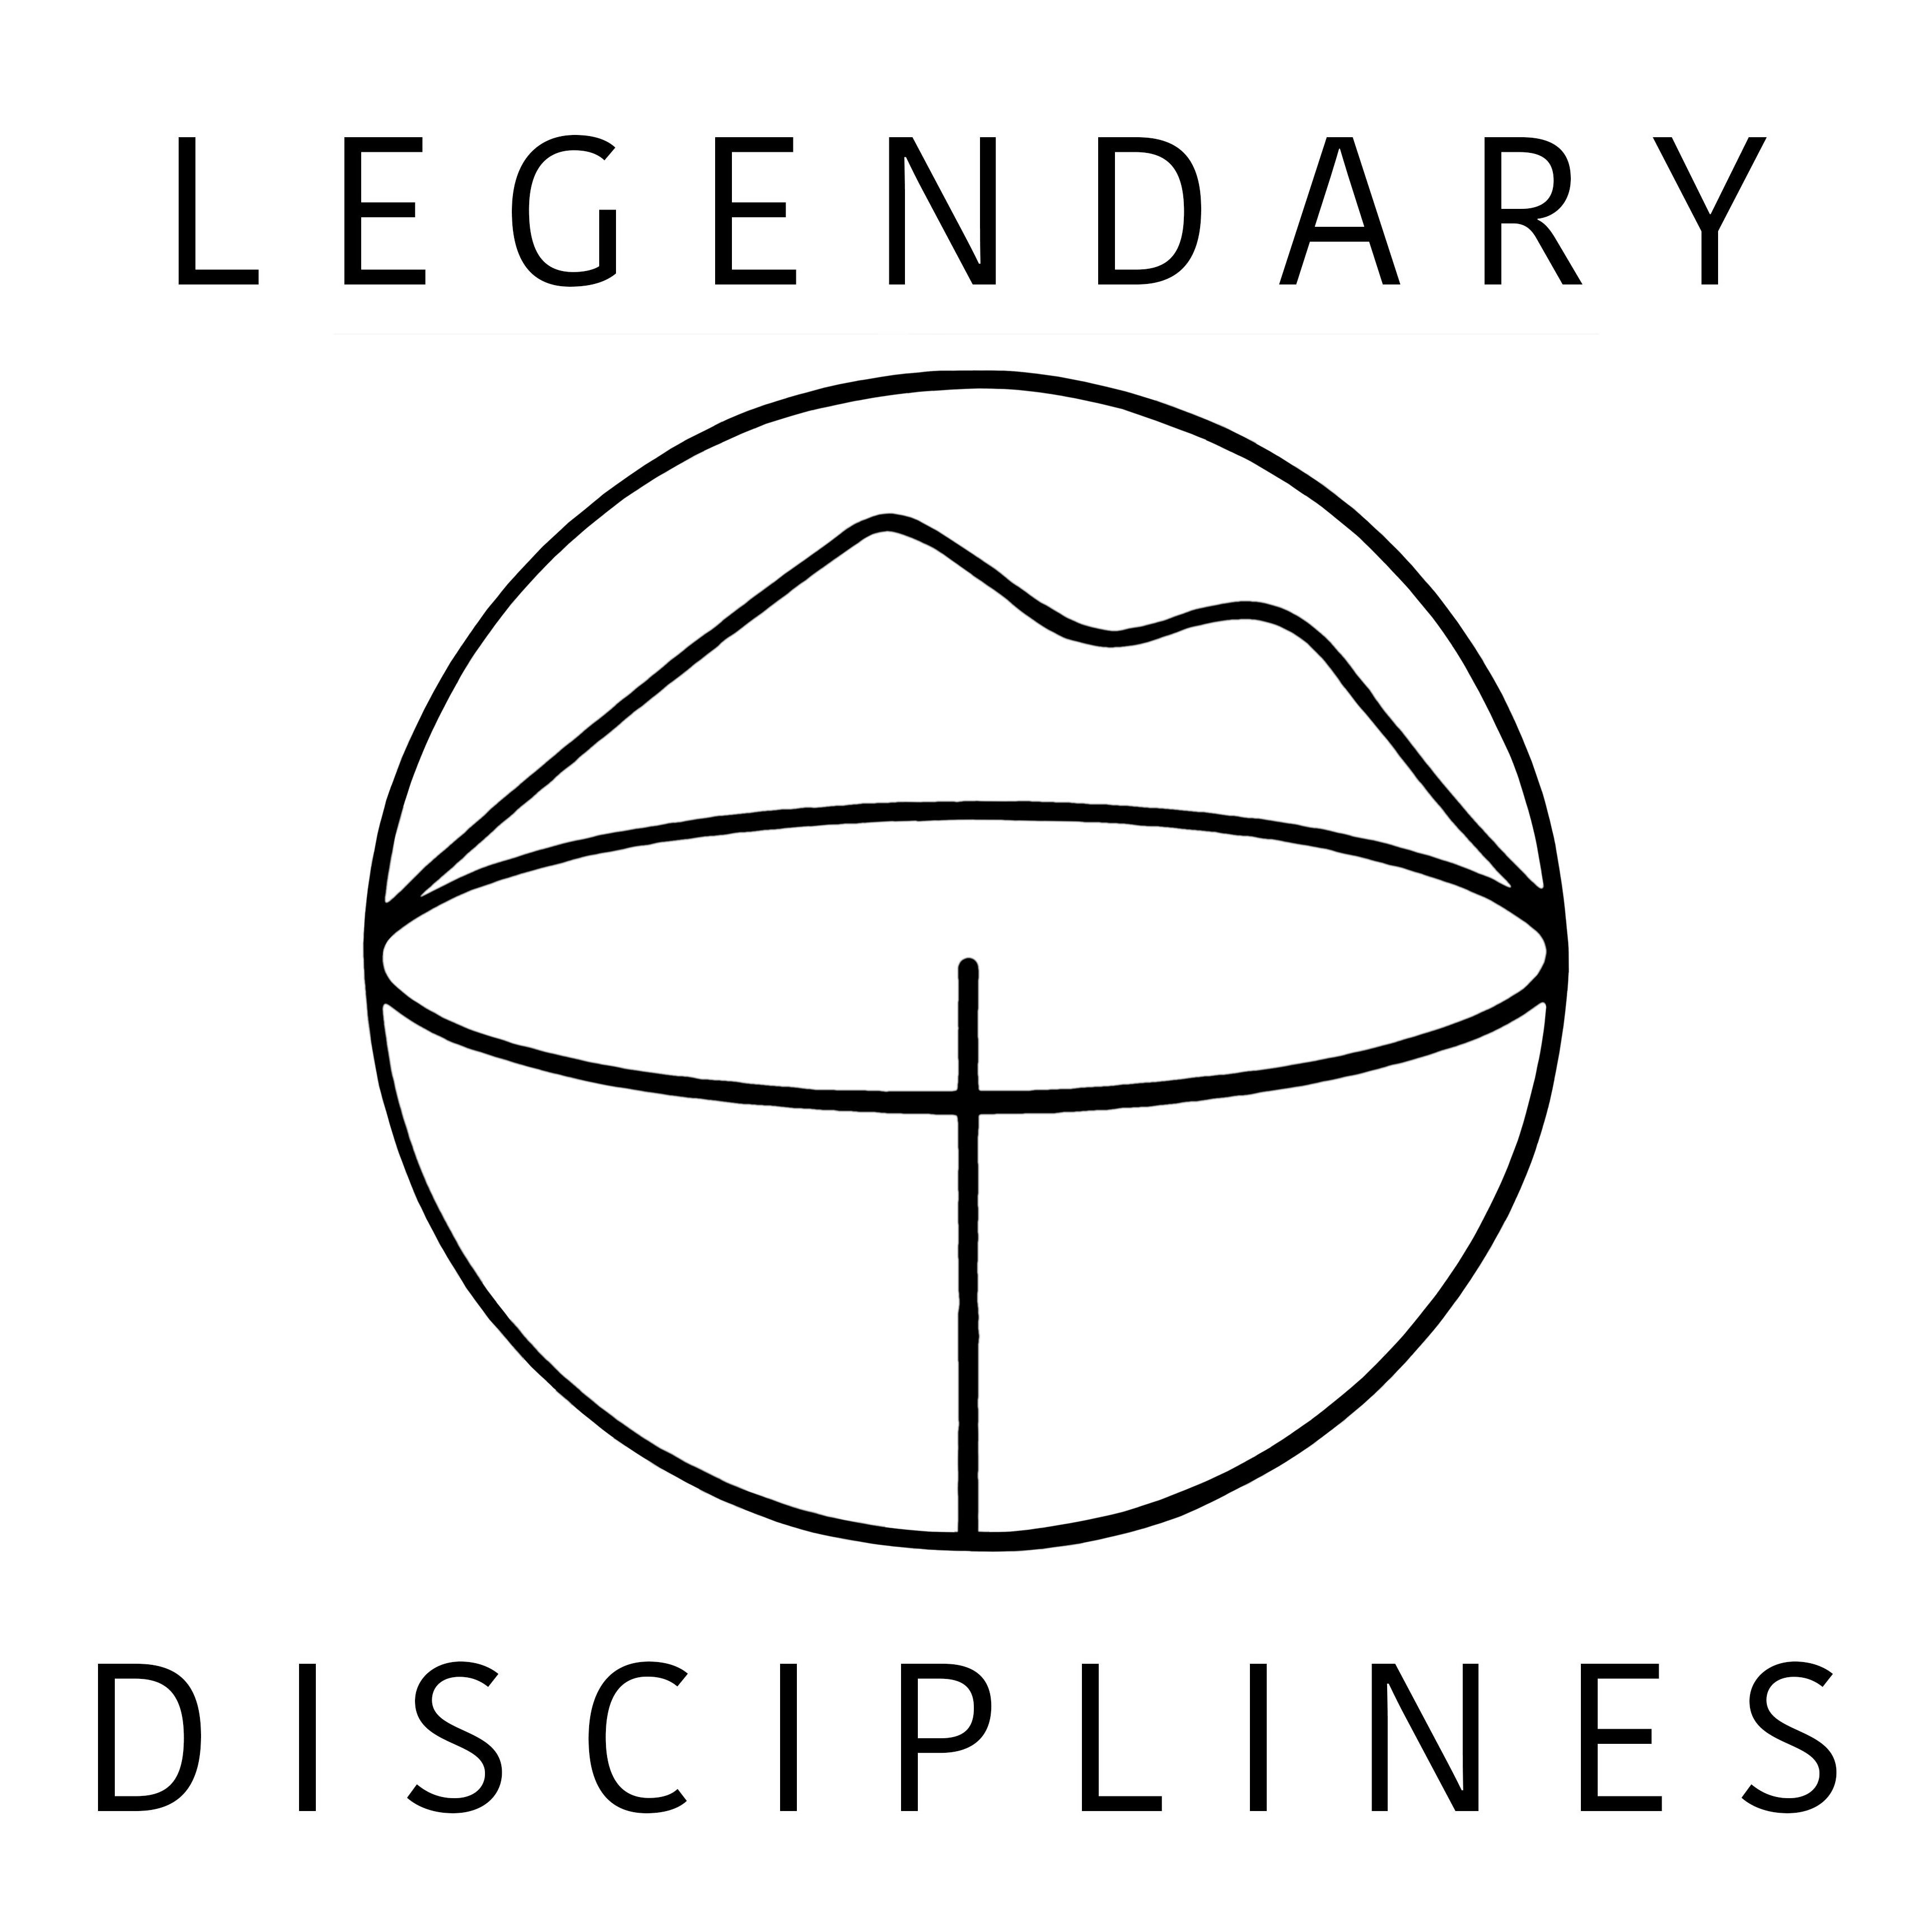  LEGENDARY DISCIPLINES